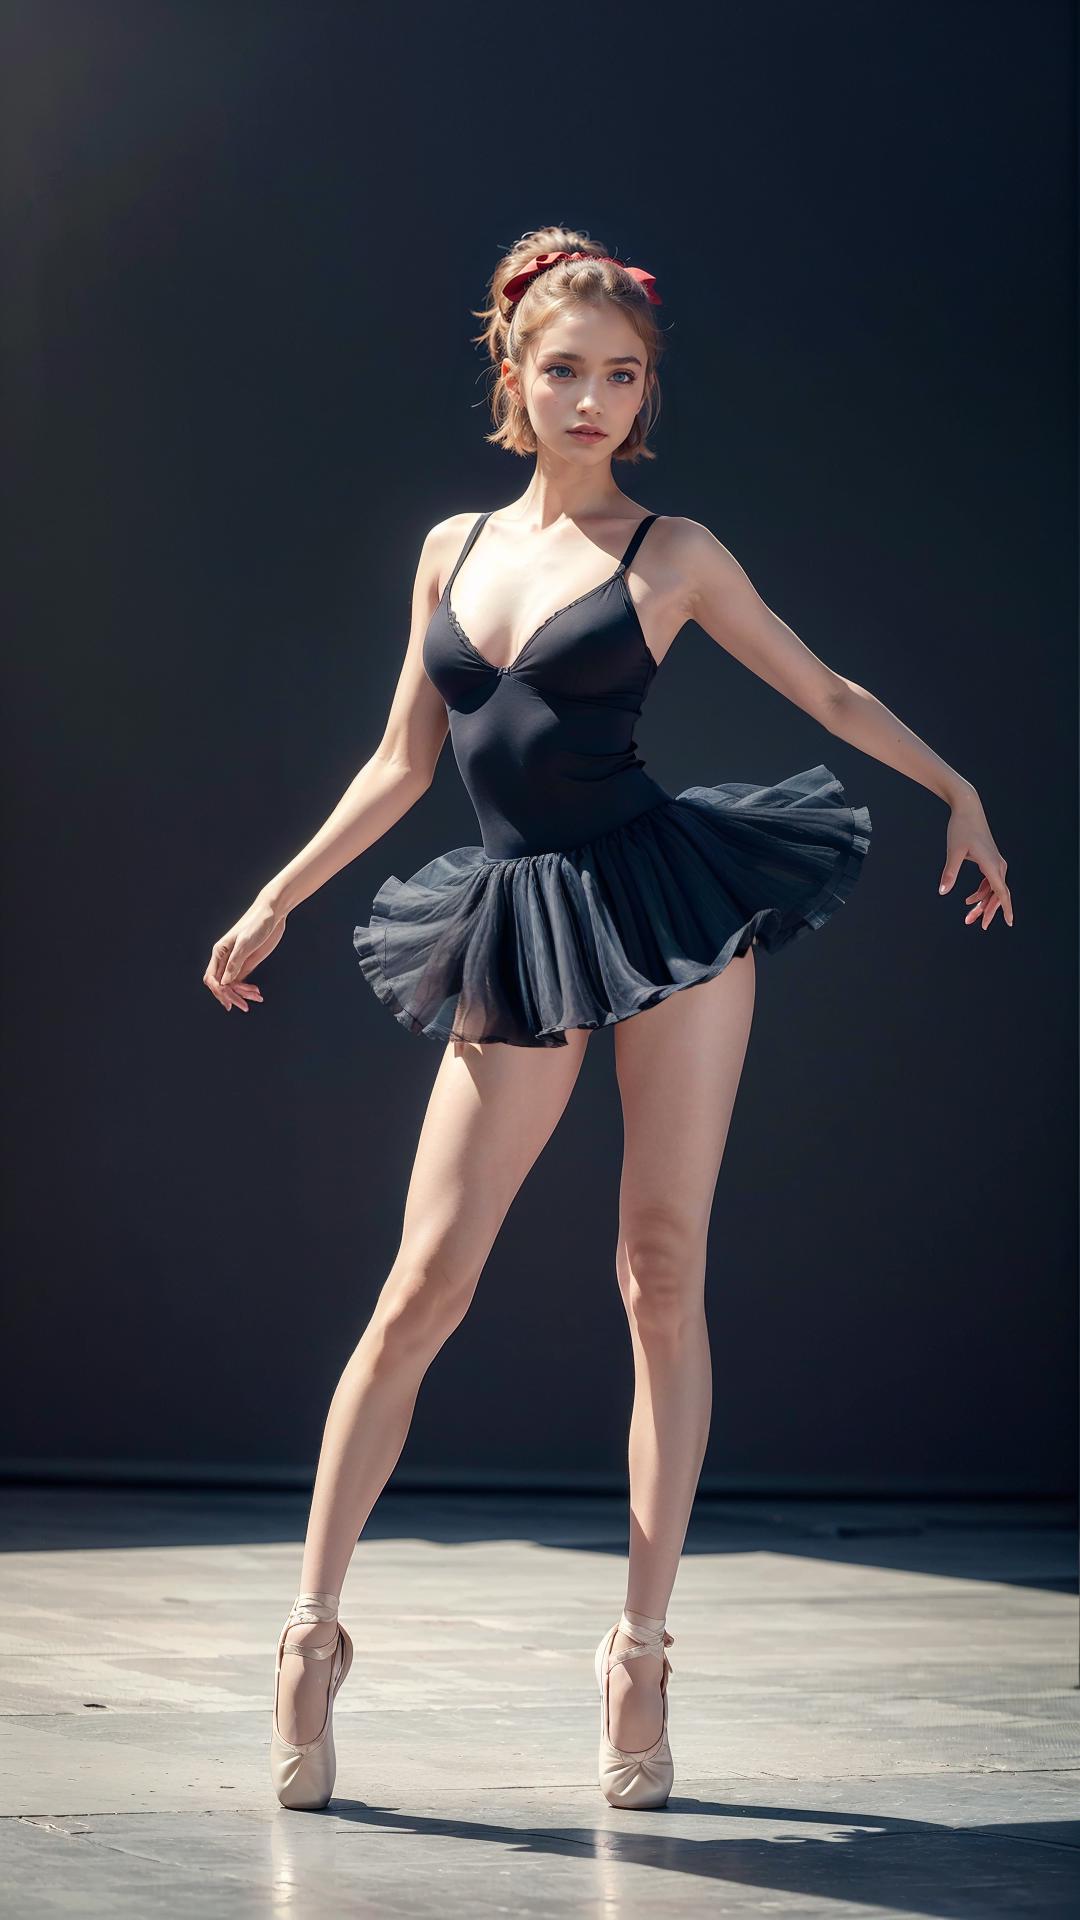 Ballet Dance Dress image by AILittlePainter